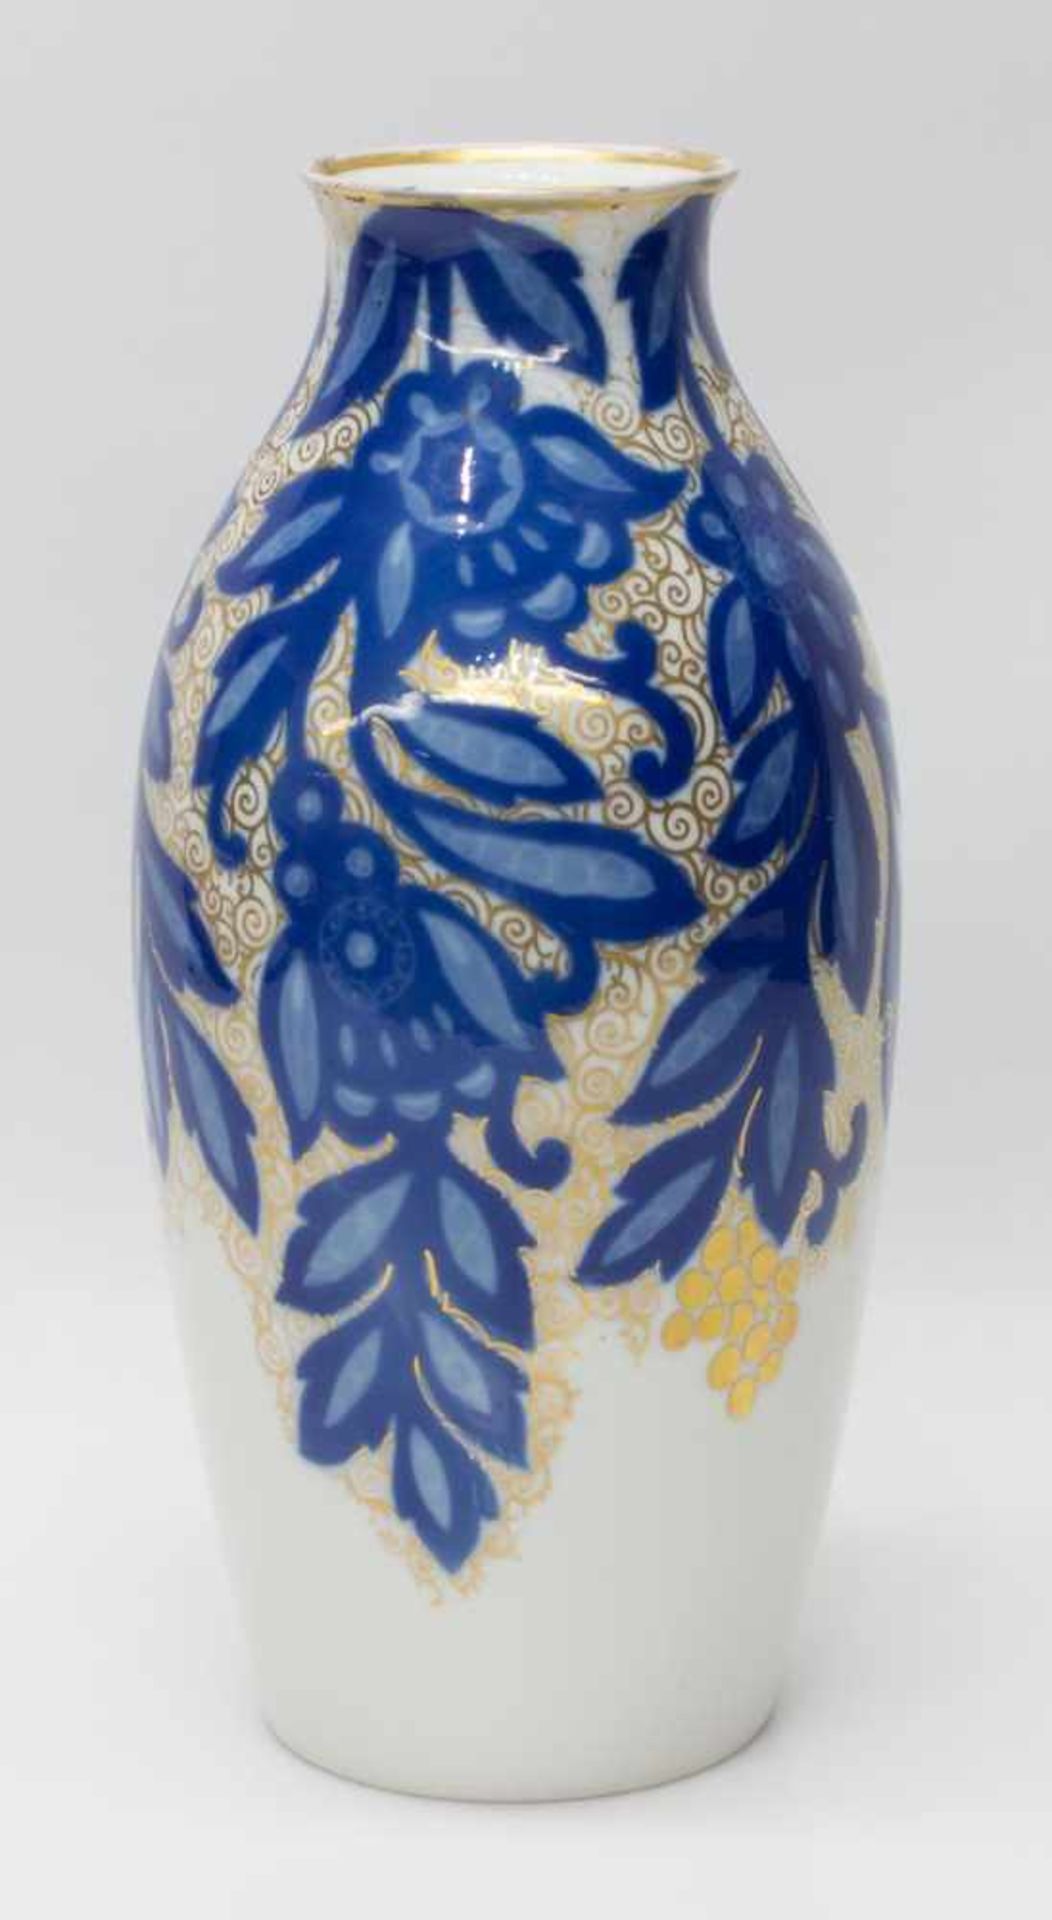 Vaseum 1910, Porzellanfabrik Philipp Rosenthal & Co. AG, , Weißporzellan mit Rosari-Dekor (Entwurf